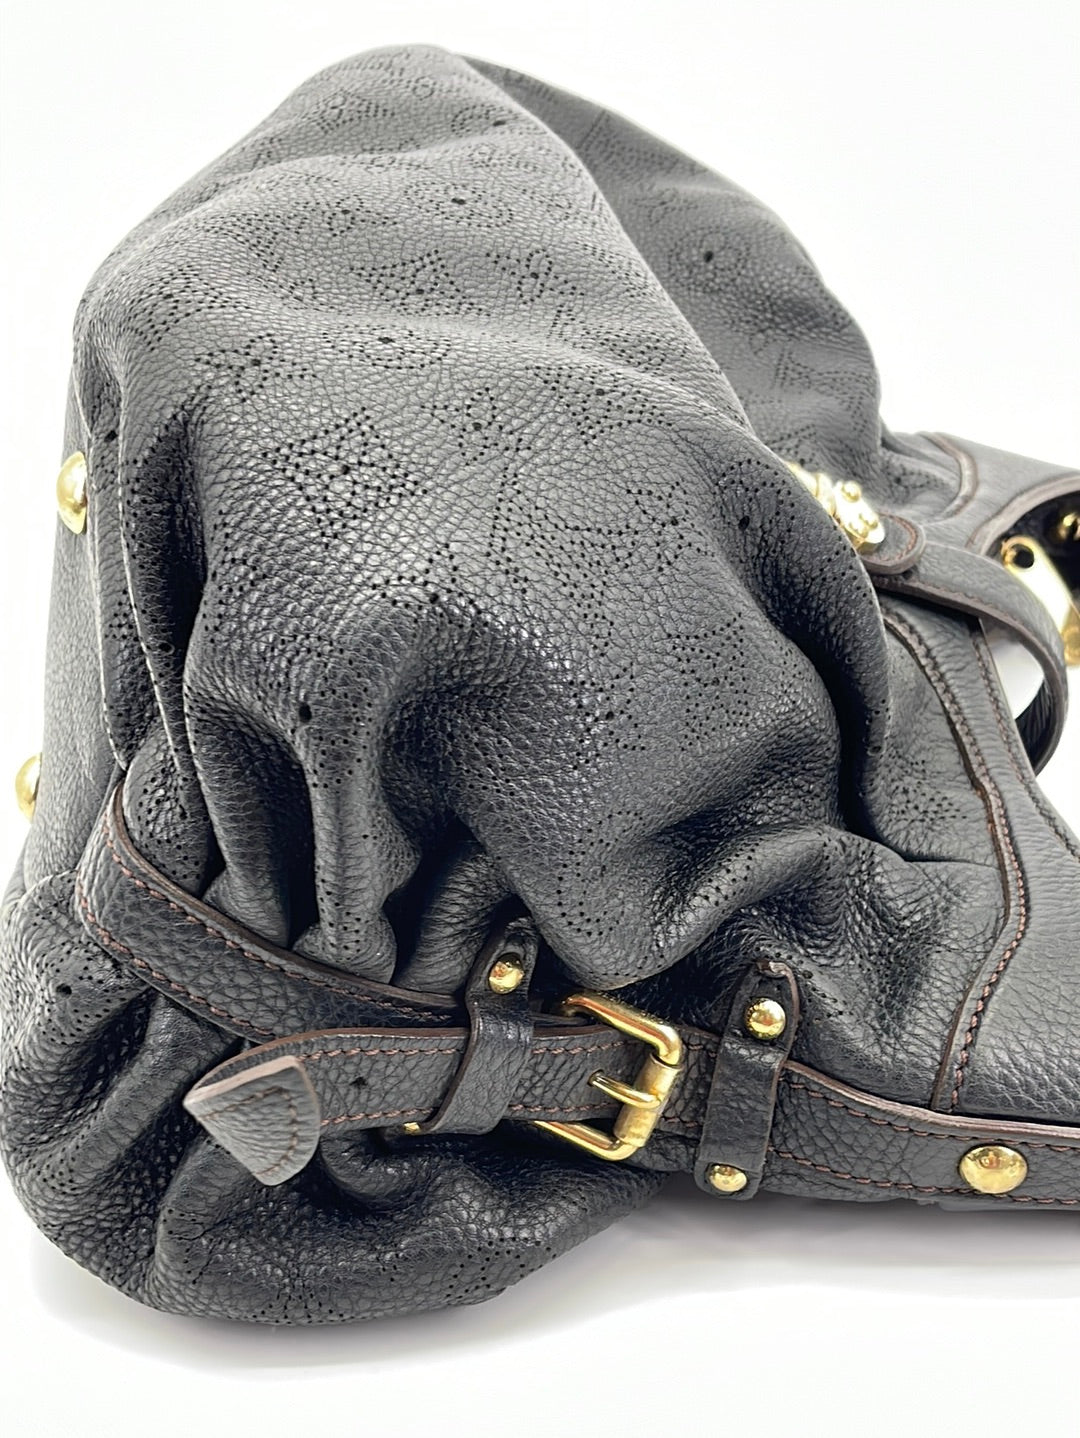 Louis Vuitton XL Hobo Mahina Leather Black 224646148